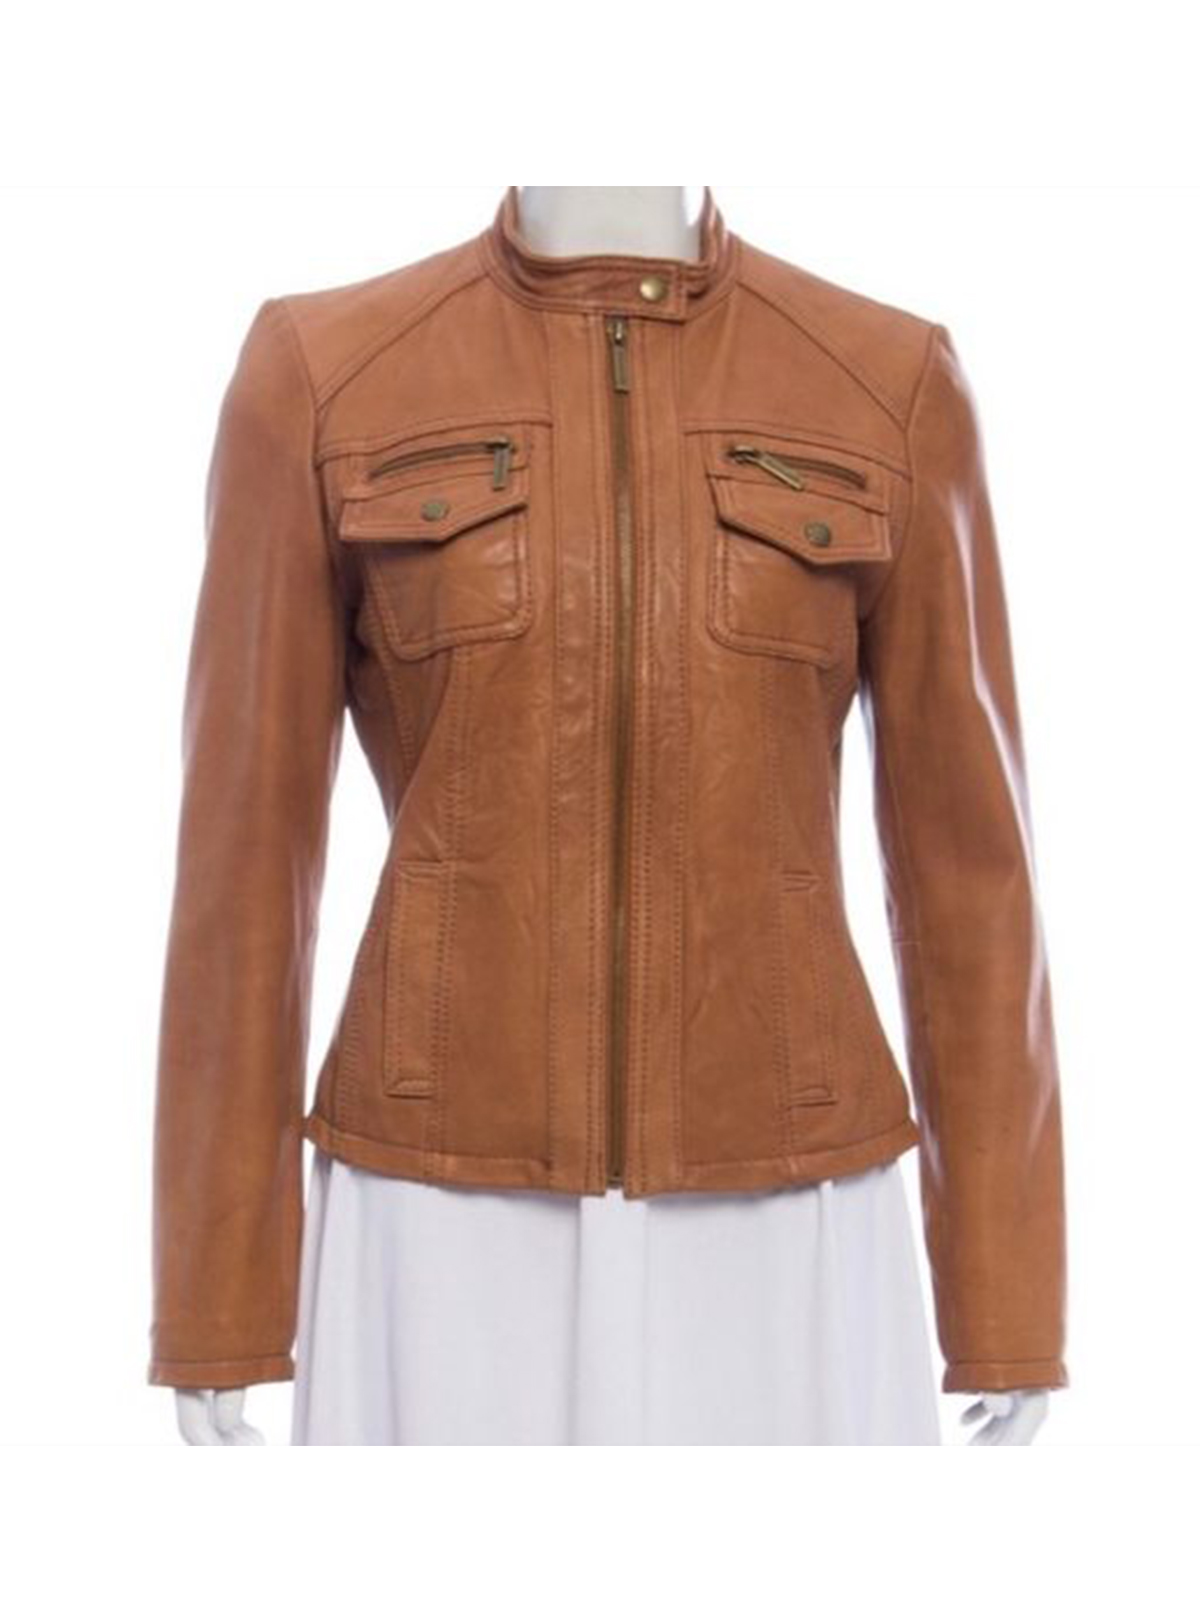 Women's Michael Kors Leather Jacket